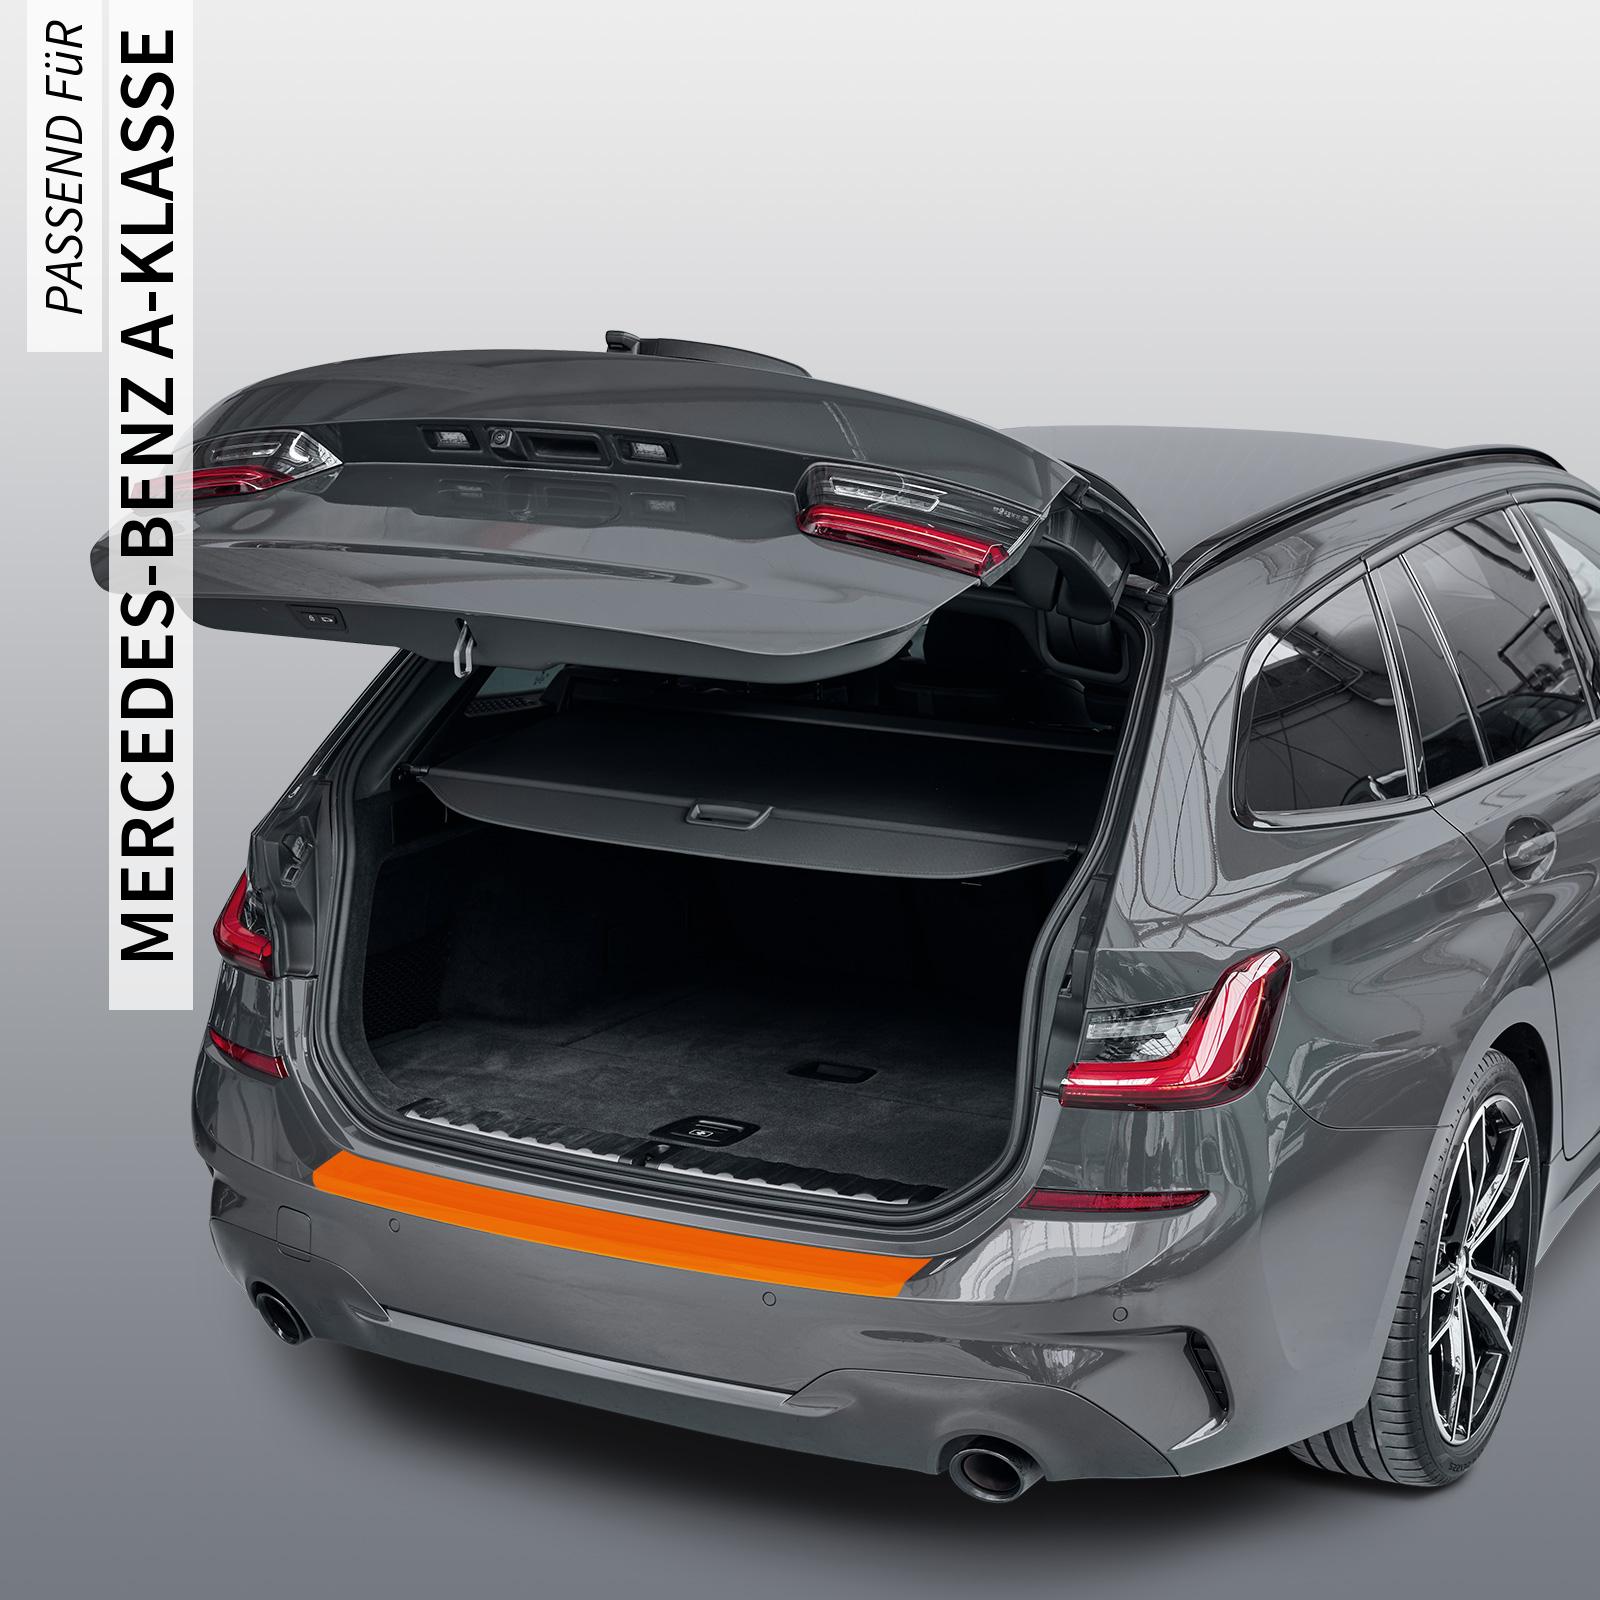 Ladekantenschutzfolie - Transparent Glatt MATT 110 µm stark  für Mercedes-Benz A-Klasse Typ V177, Limousine, ab BJ 05/2018